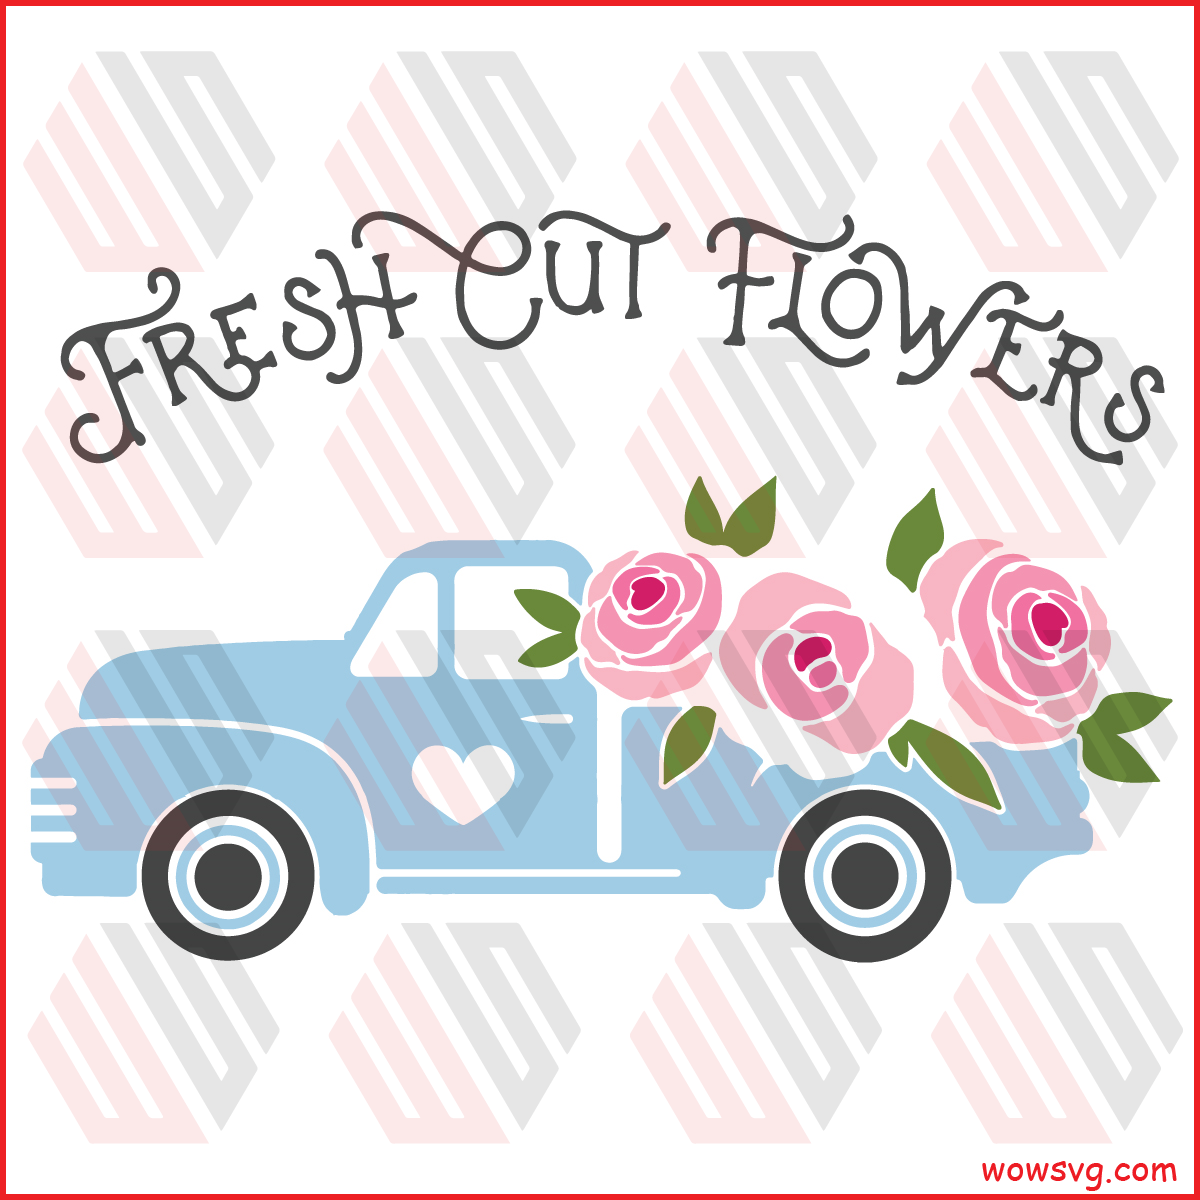 Fresh Cut Flowers Svg, Trending Svg, Flower Svg, Flower Truck Svg,